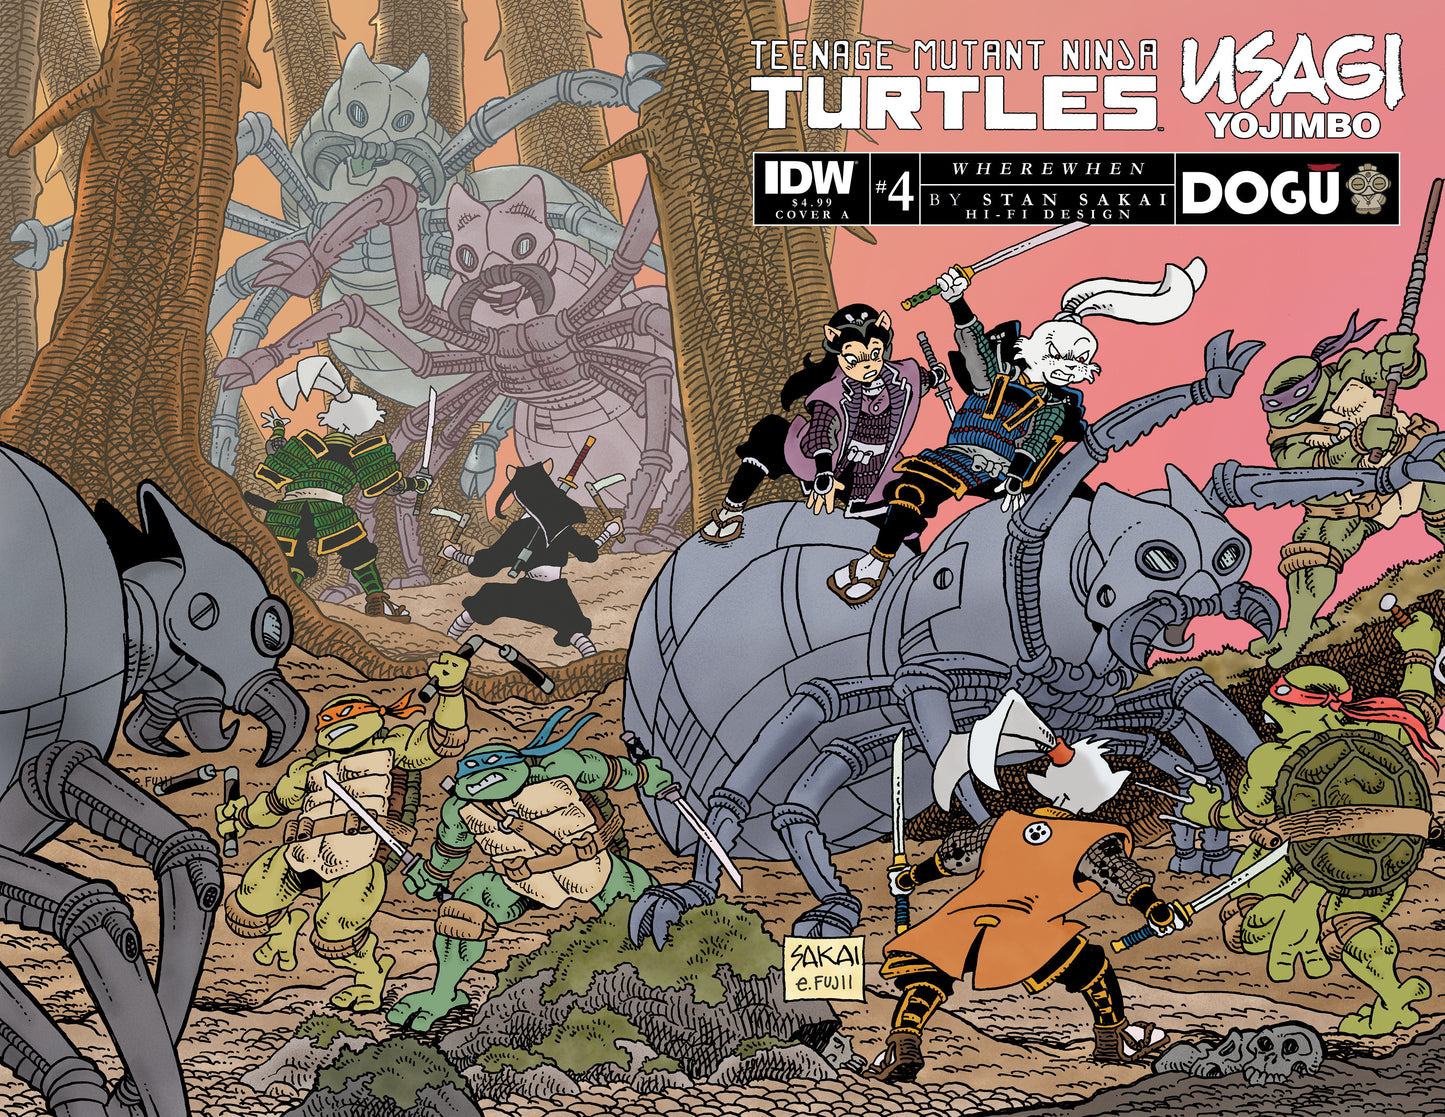 Teenage Mutant Ninja Turtles/Usagi Yojimbo: Wherewhen #4 Cover A (Sakai)